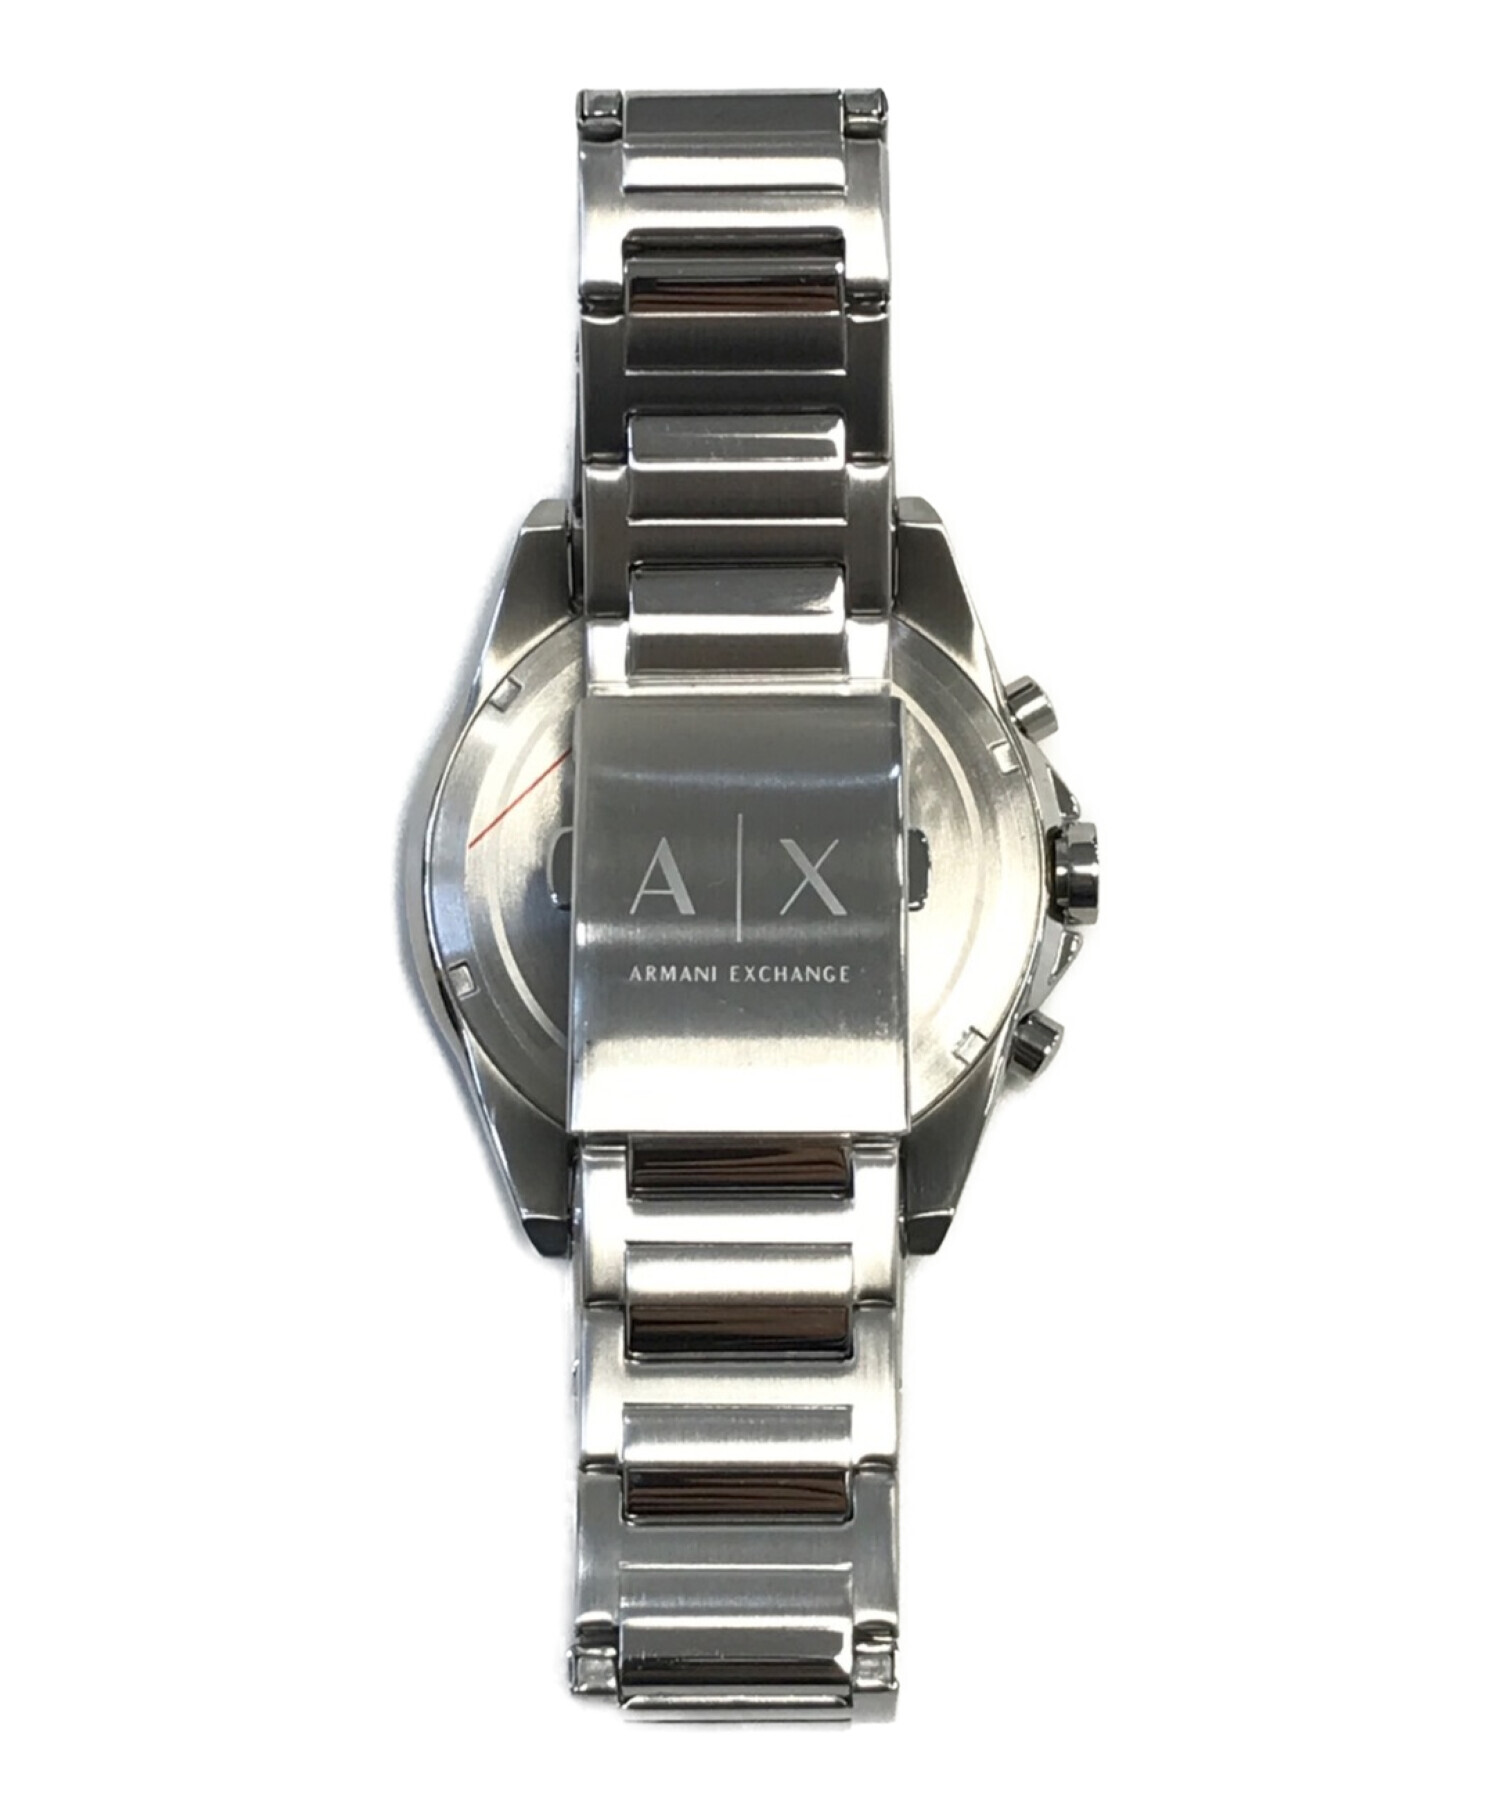 ARMANI EXCHANGE (アルマーニ エクスチェンジ) 腕時計 サイズ:表記なし